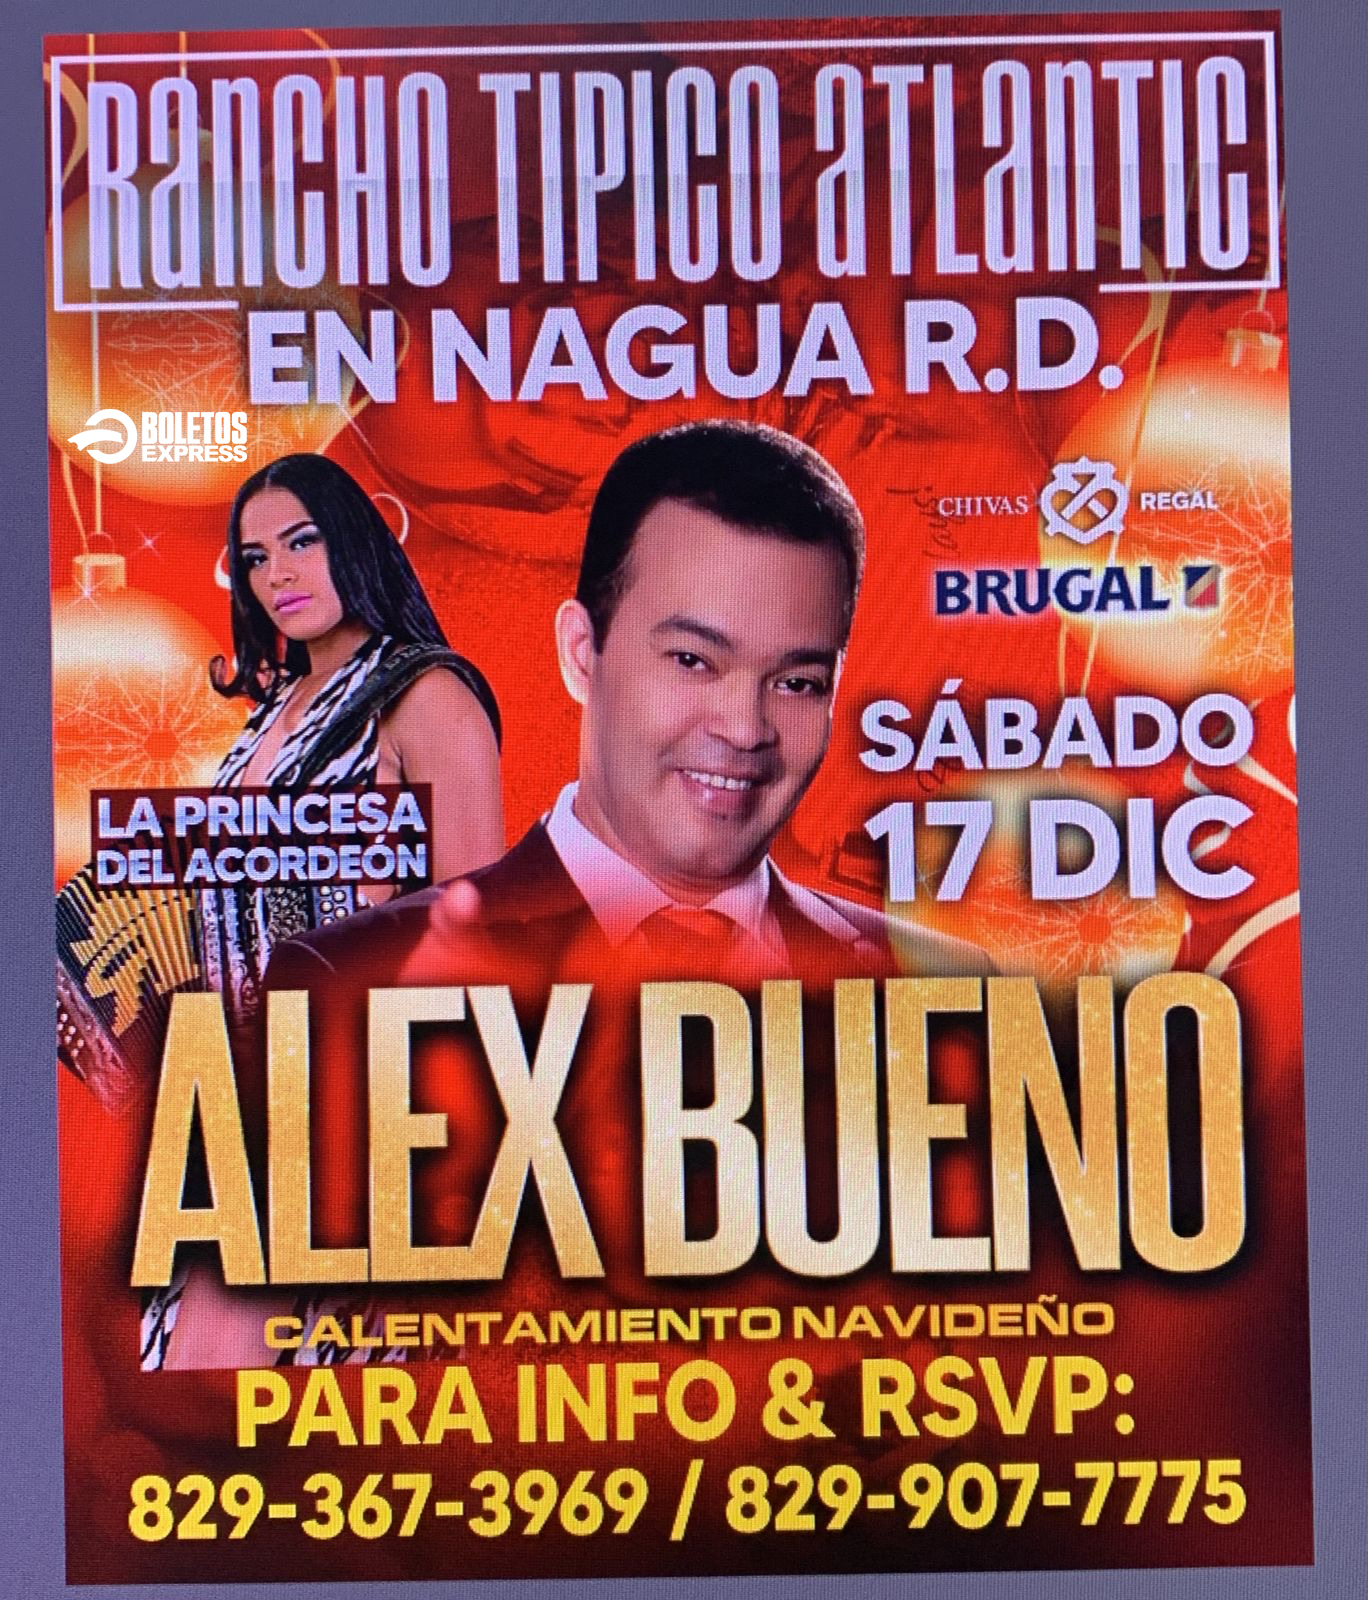 Alex Bueno Tickets Boletosexpress